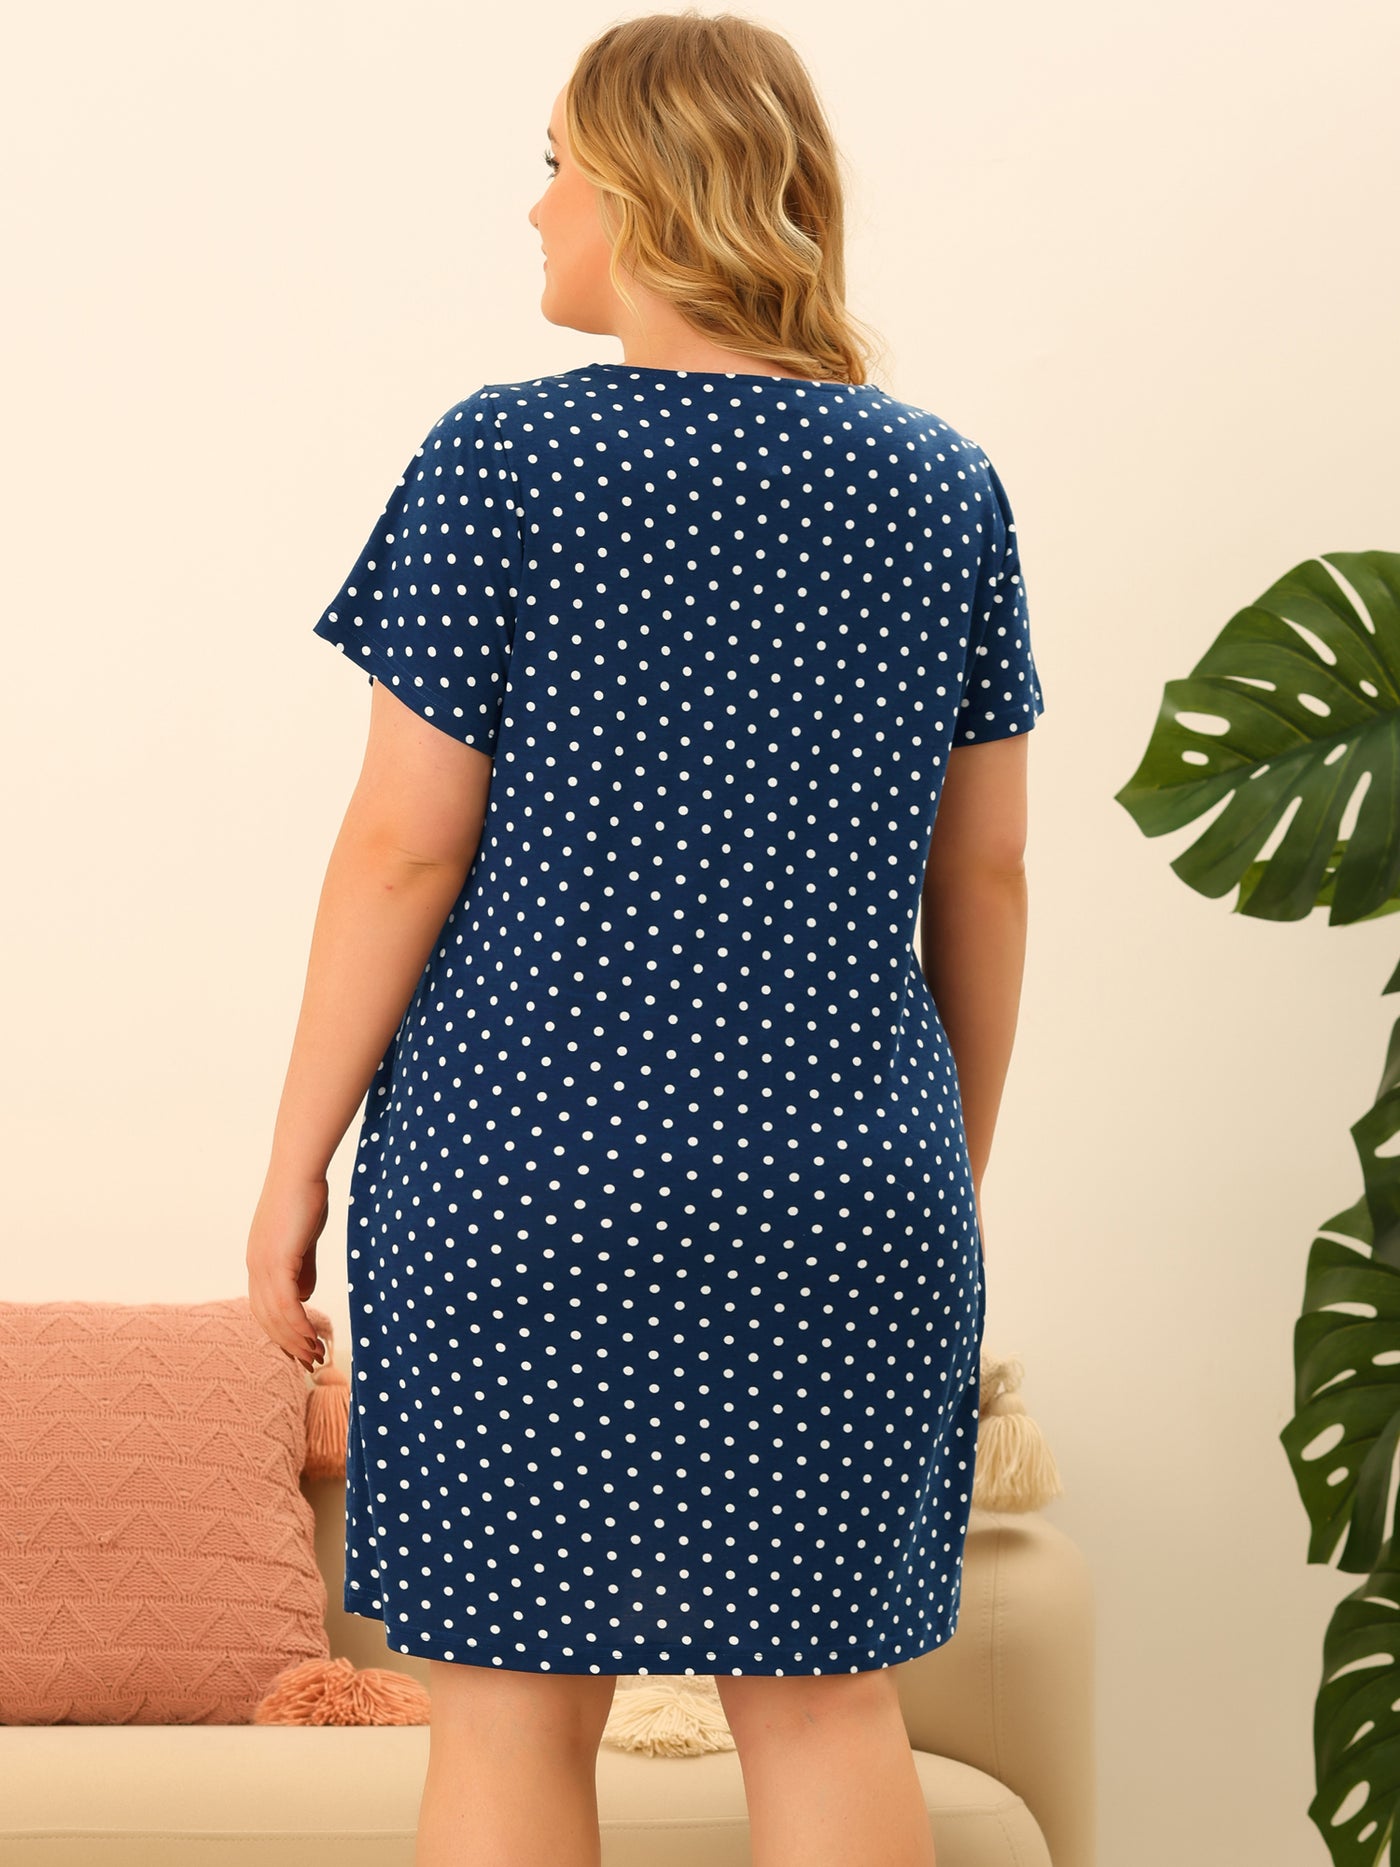 Bublédon Women's Plus Size Polka Dots V Neck Sleepwear Nightdress